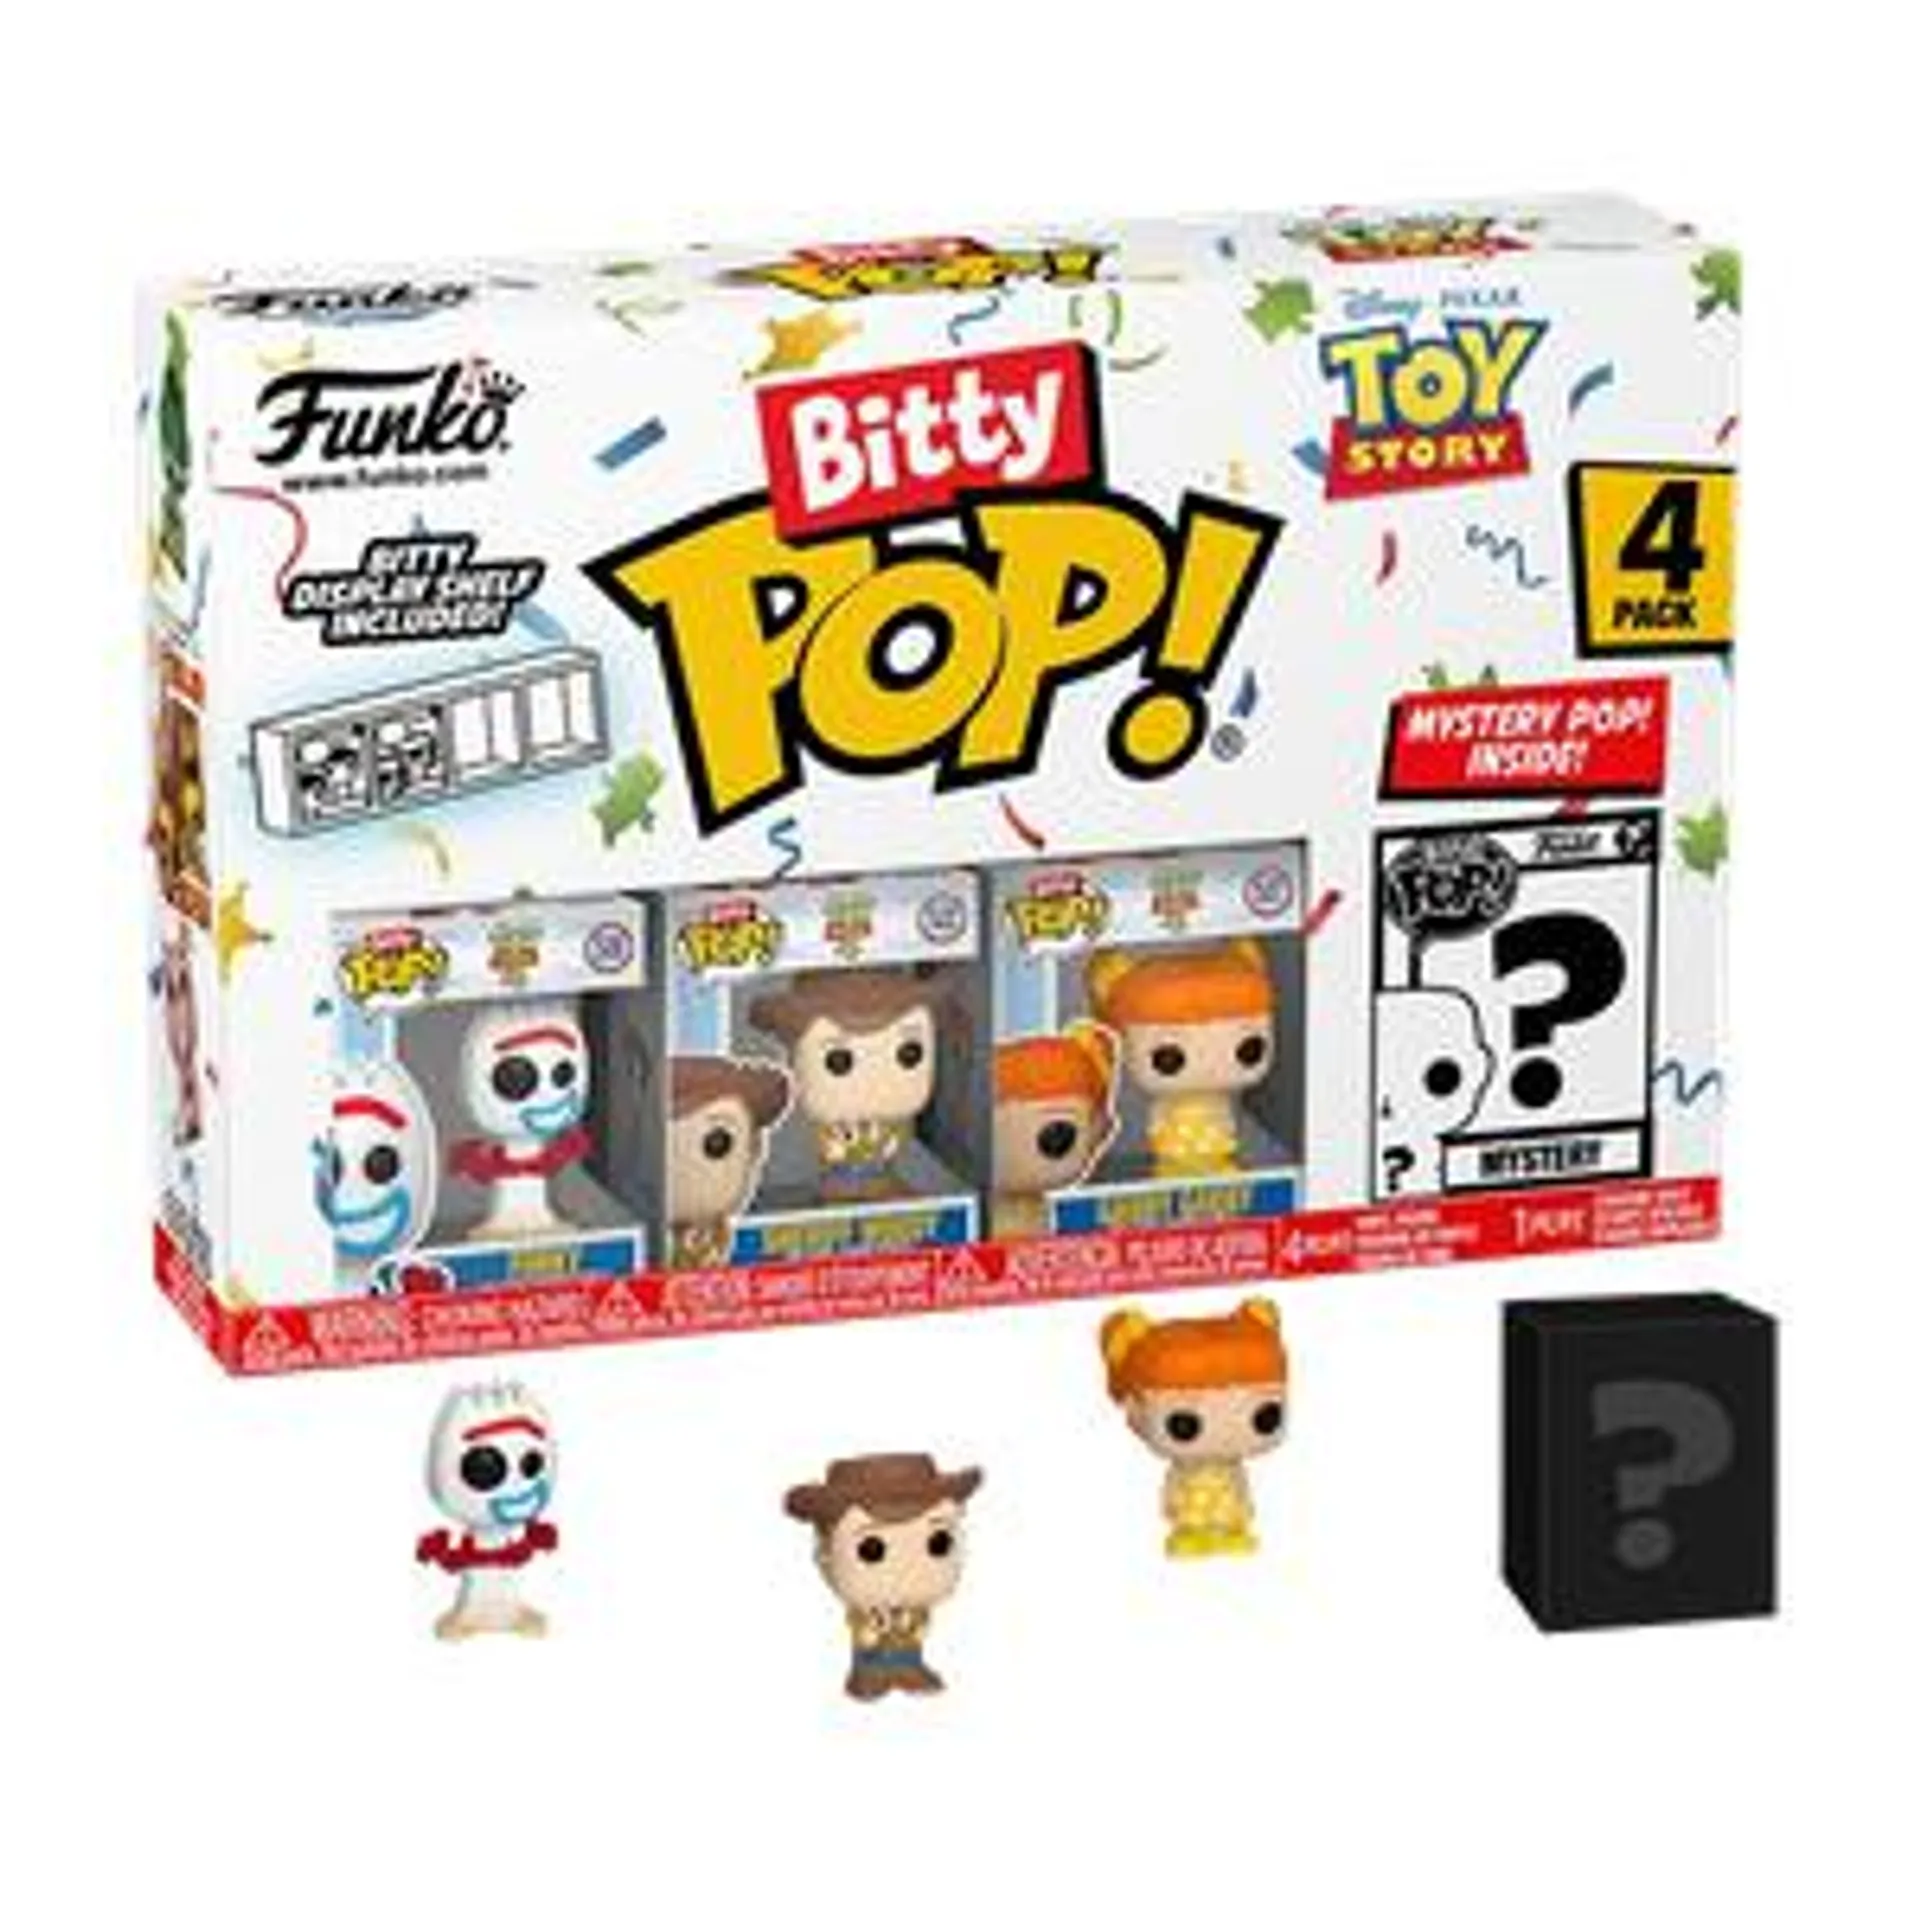 Toy Story: Bitty Pop! Vinyl Figure 4-Pack: Forky, Woody, Gabby Gabyy & Mystery Figure